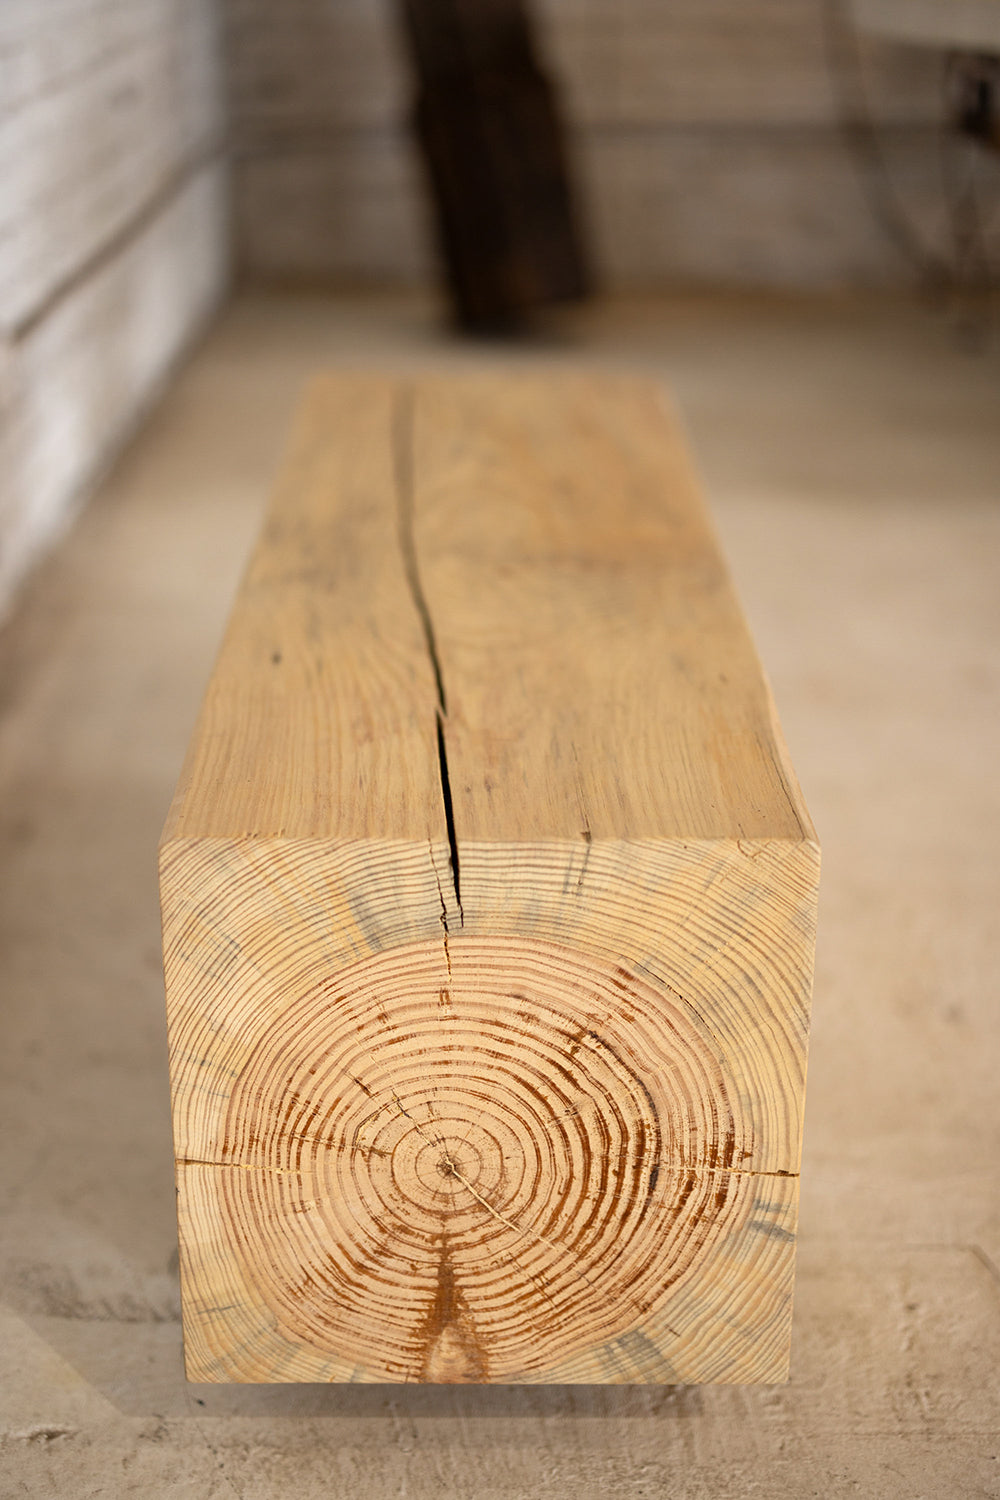 Reclaimed Wood Beam Bench 4 foot natural crack